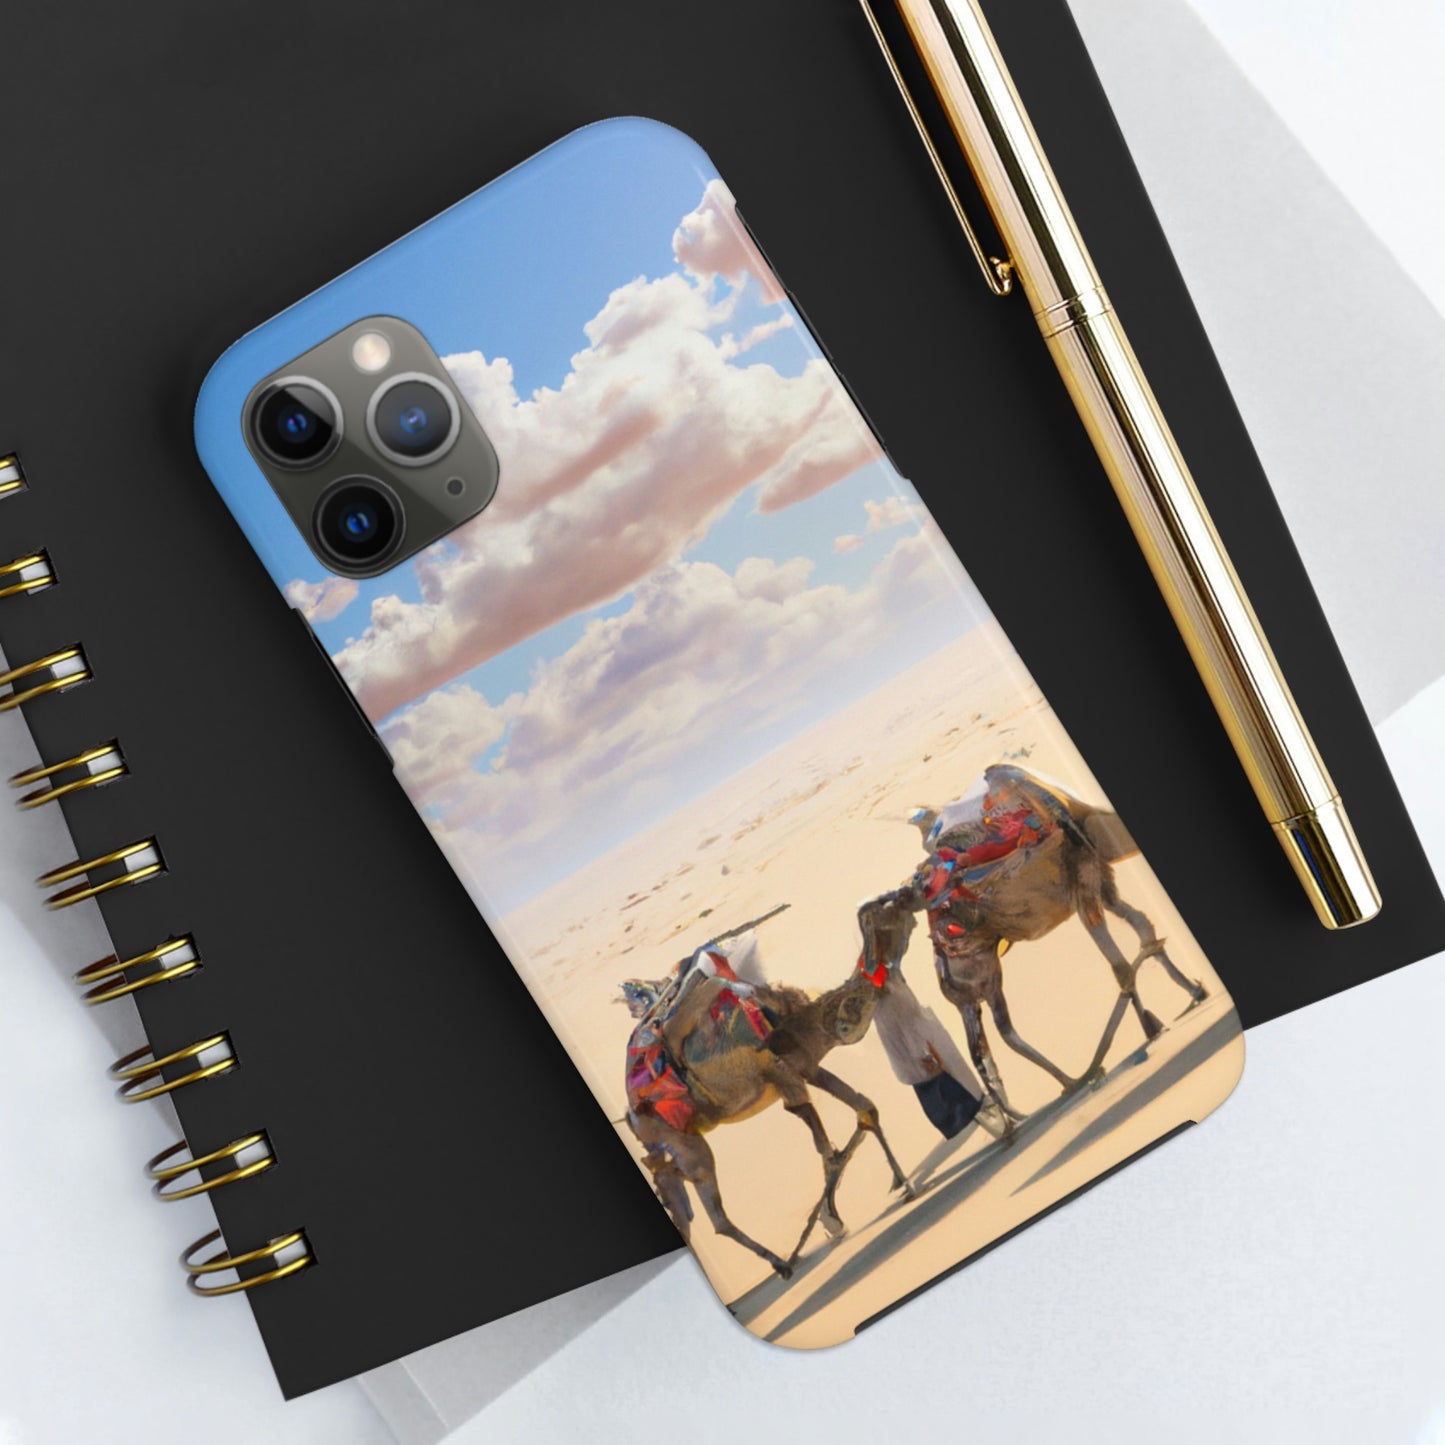 Tough iPhone Cases - Camel Caravan